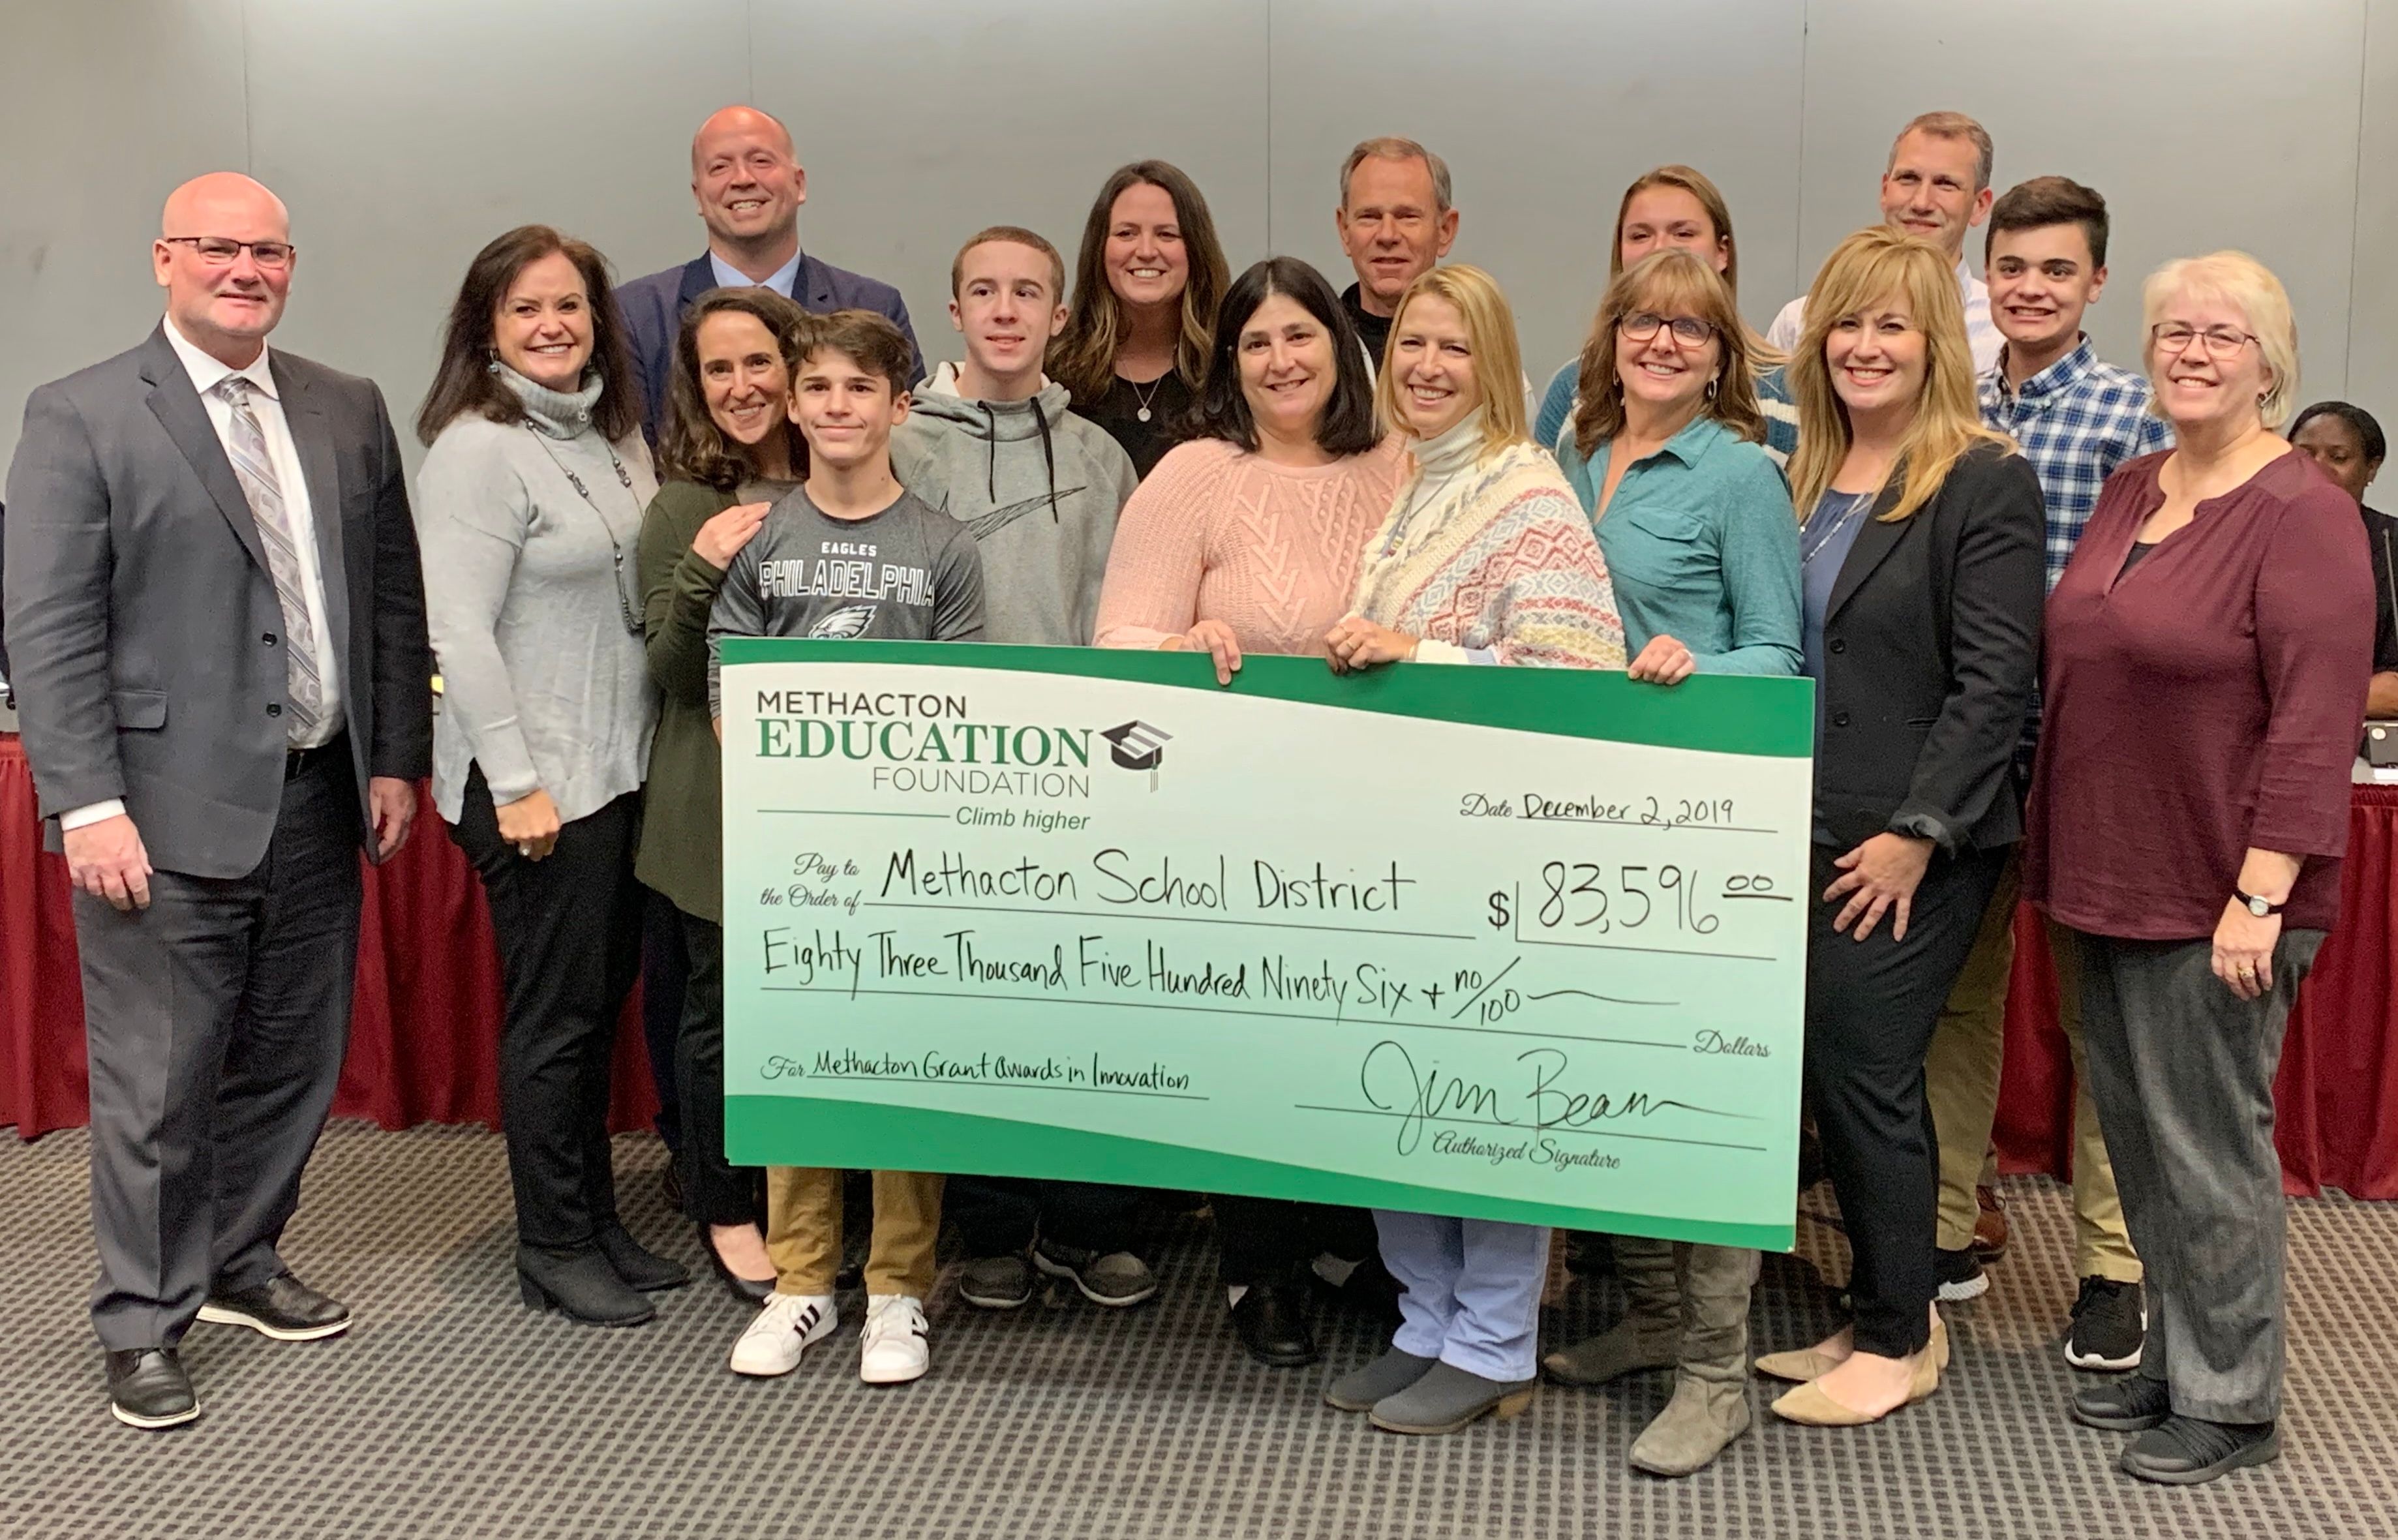 Foundation Awards $83,596 to Methacton School District